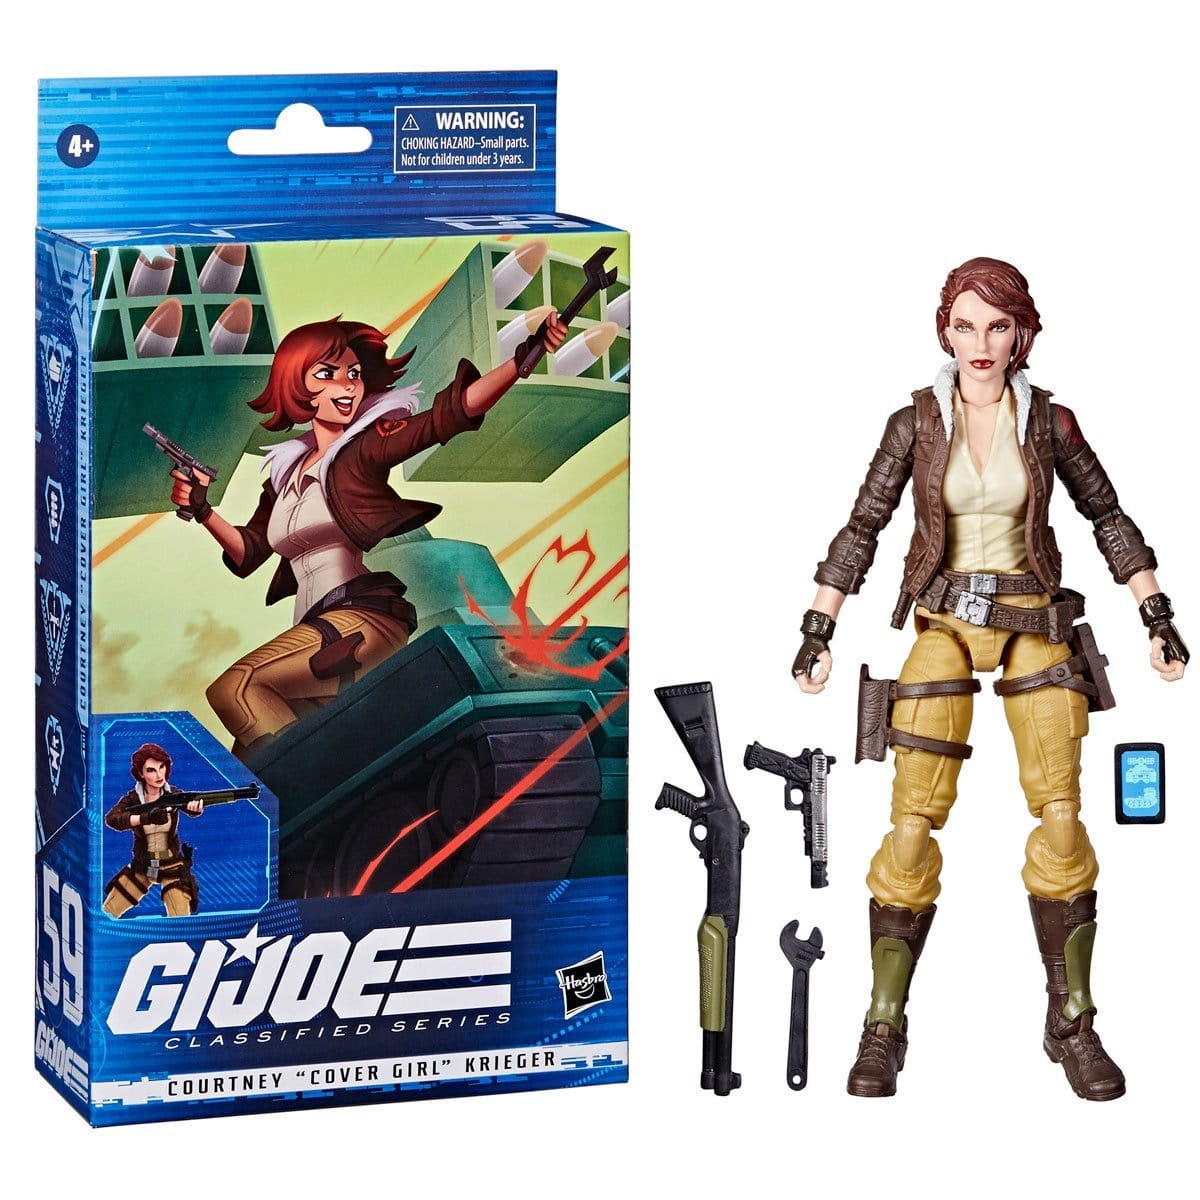 G.I. Joe Classified Series Courtney “Cover Girl” Krieger Action Figure - Pop-O-Loco - Hasbro